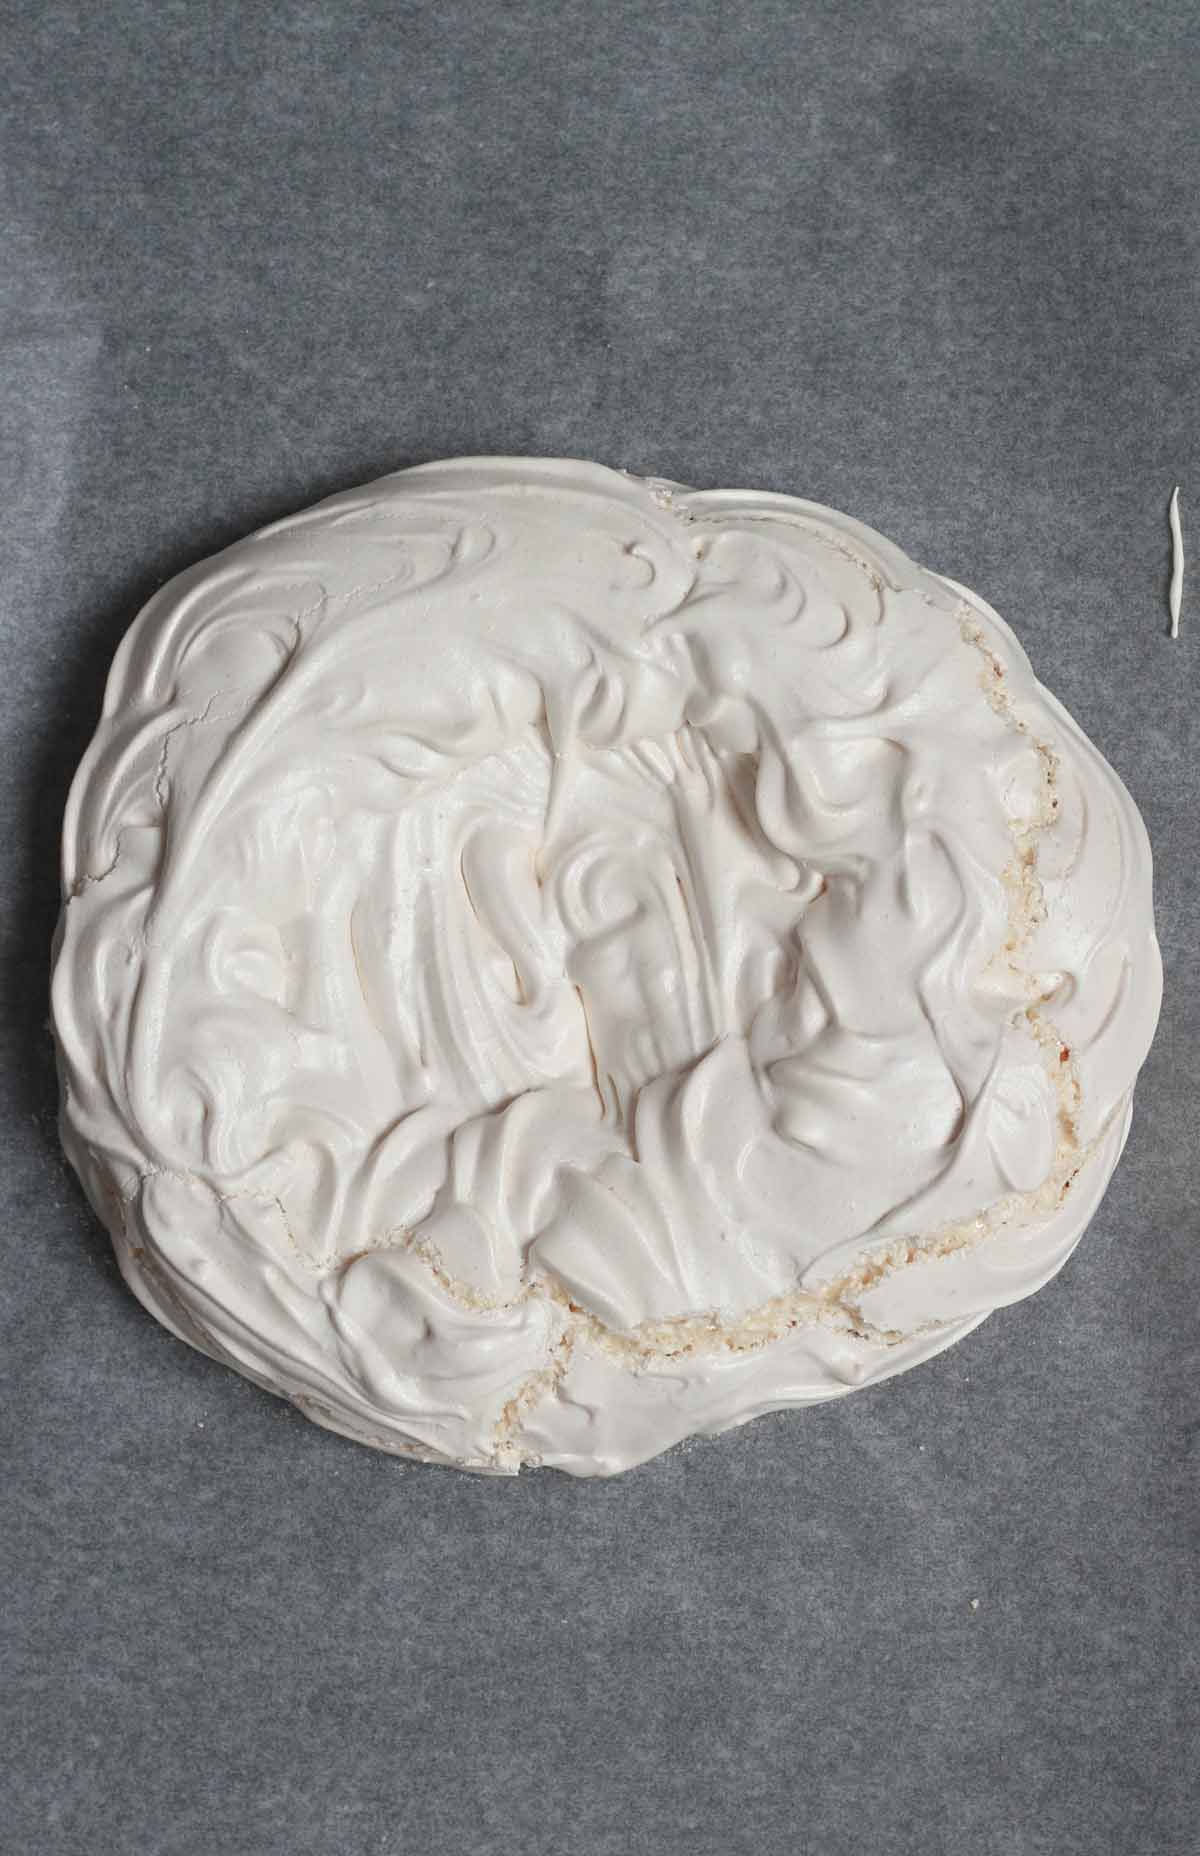 Baked Vegan meringue On Tray